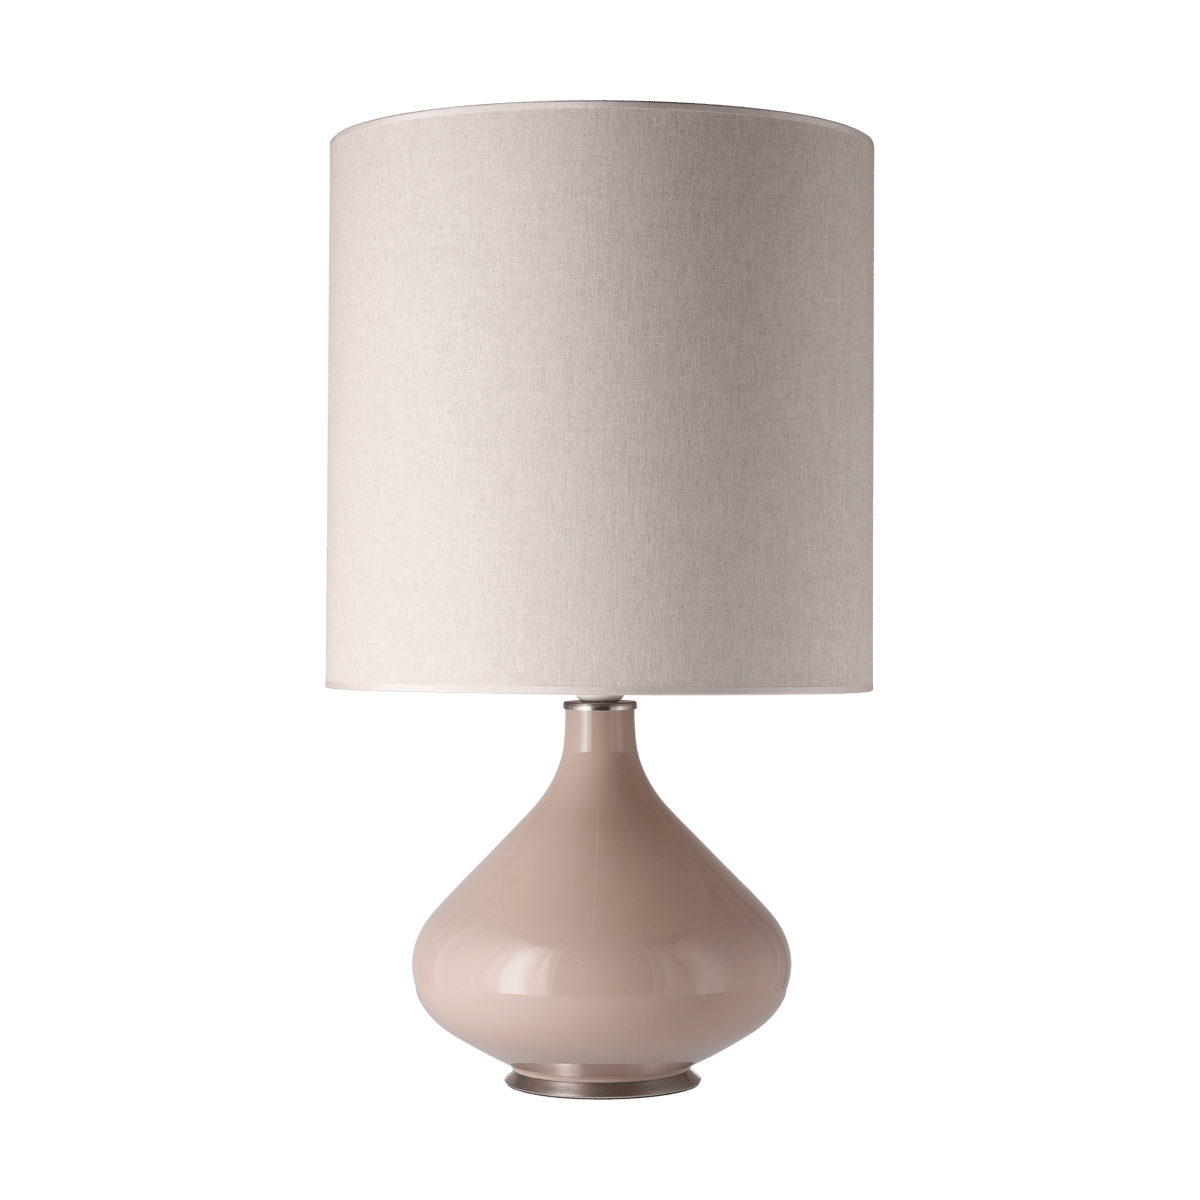 Flavia Lamps Flavia tafellamp beige lampvoet Milano Tostado M